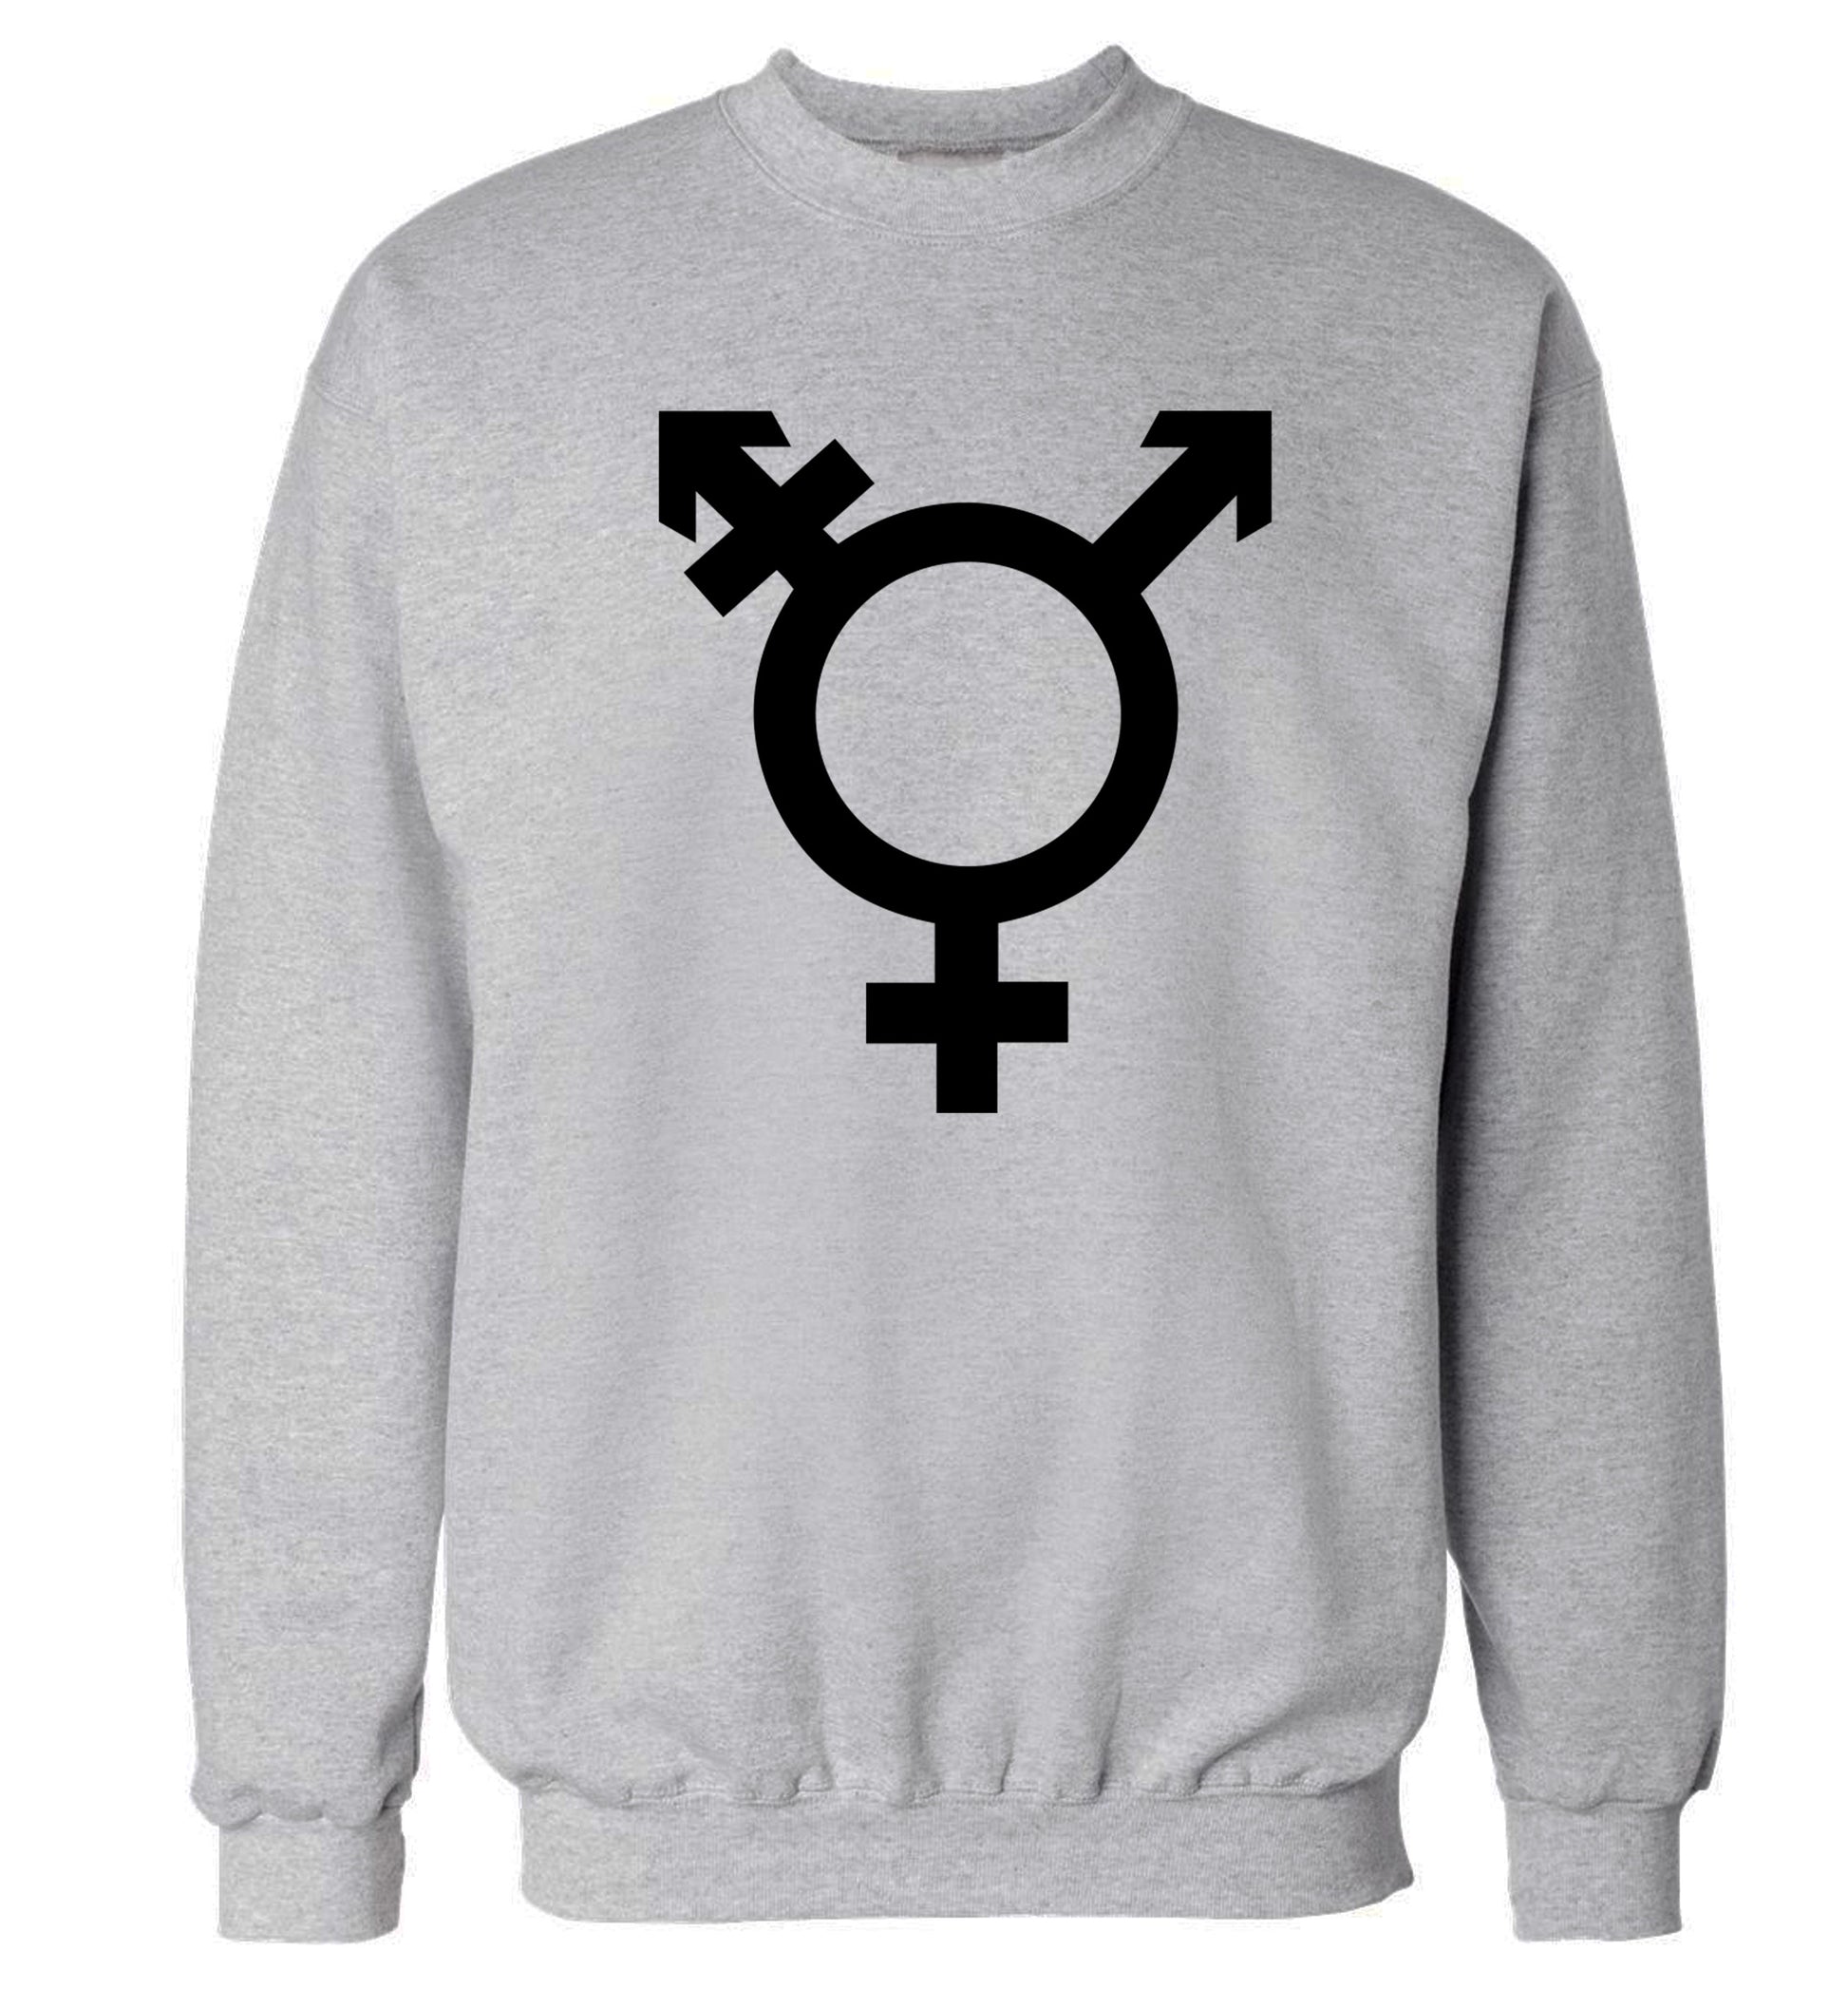 Gender neutral symbol large Adult's unisex grey Sweater 2XL